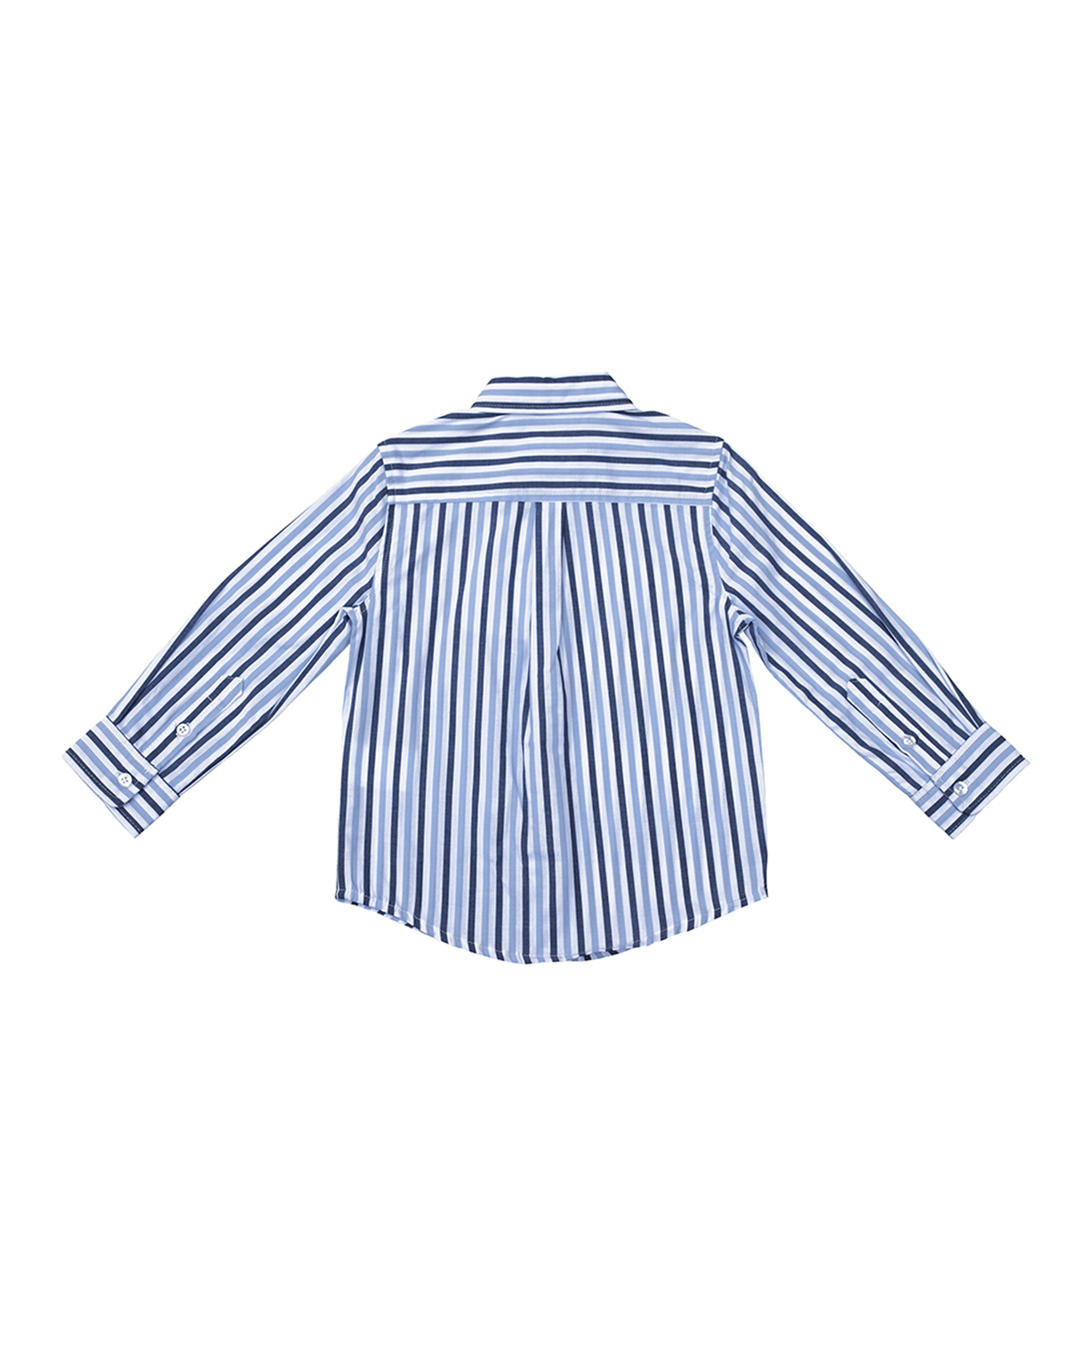 Camisa manga larga de rayas azules y blancas